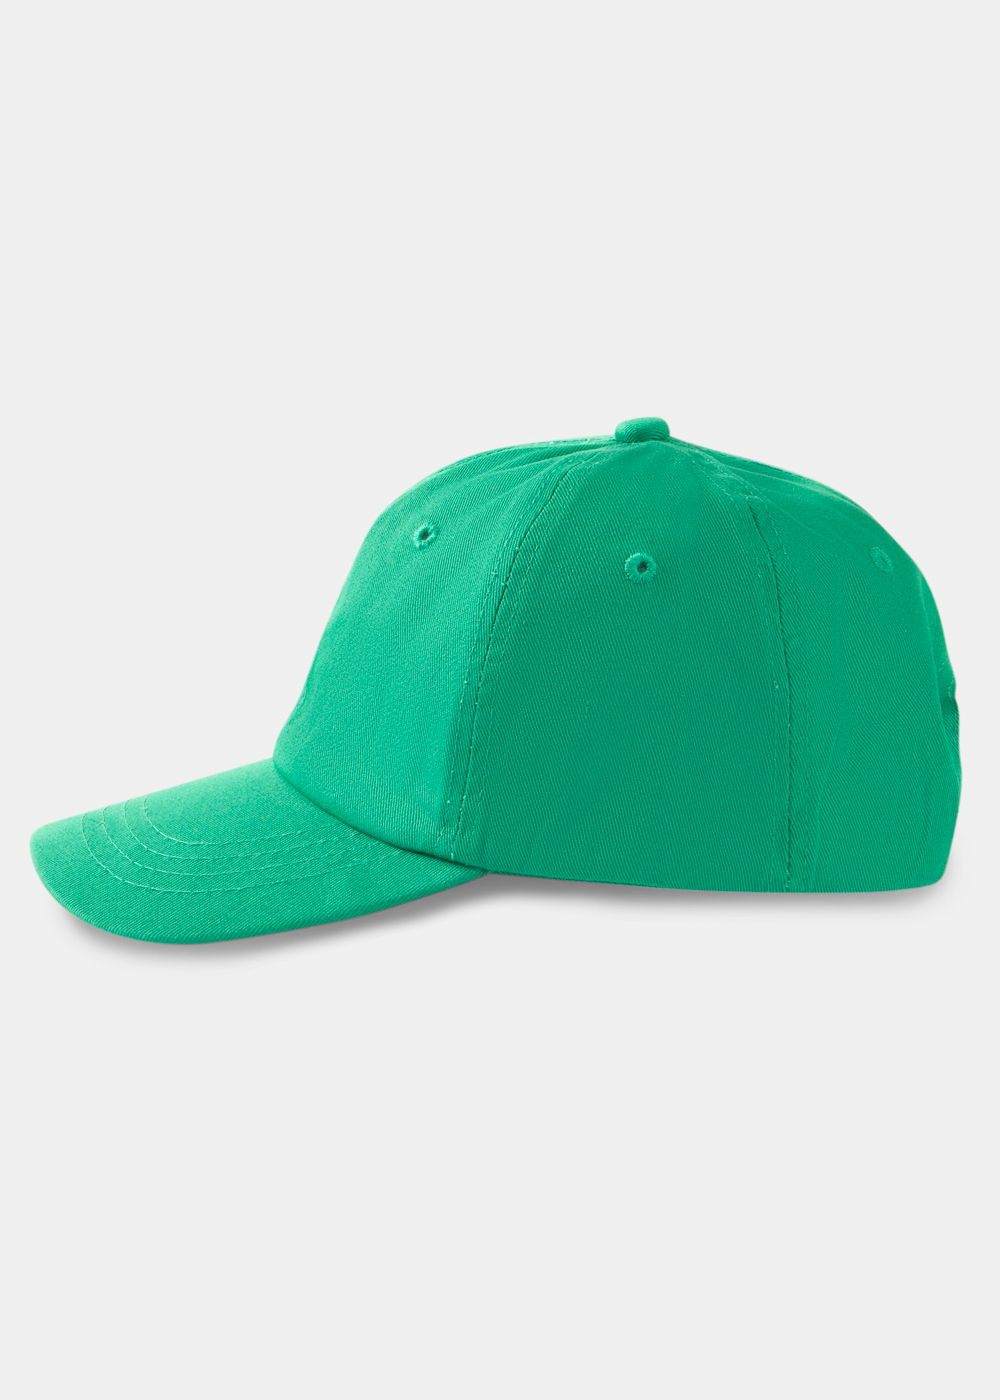 Green Soft Cap